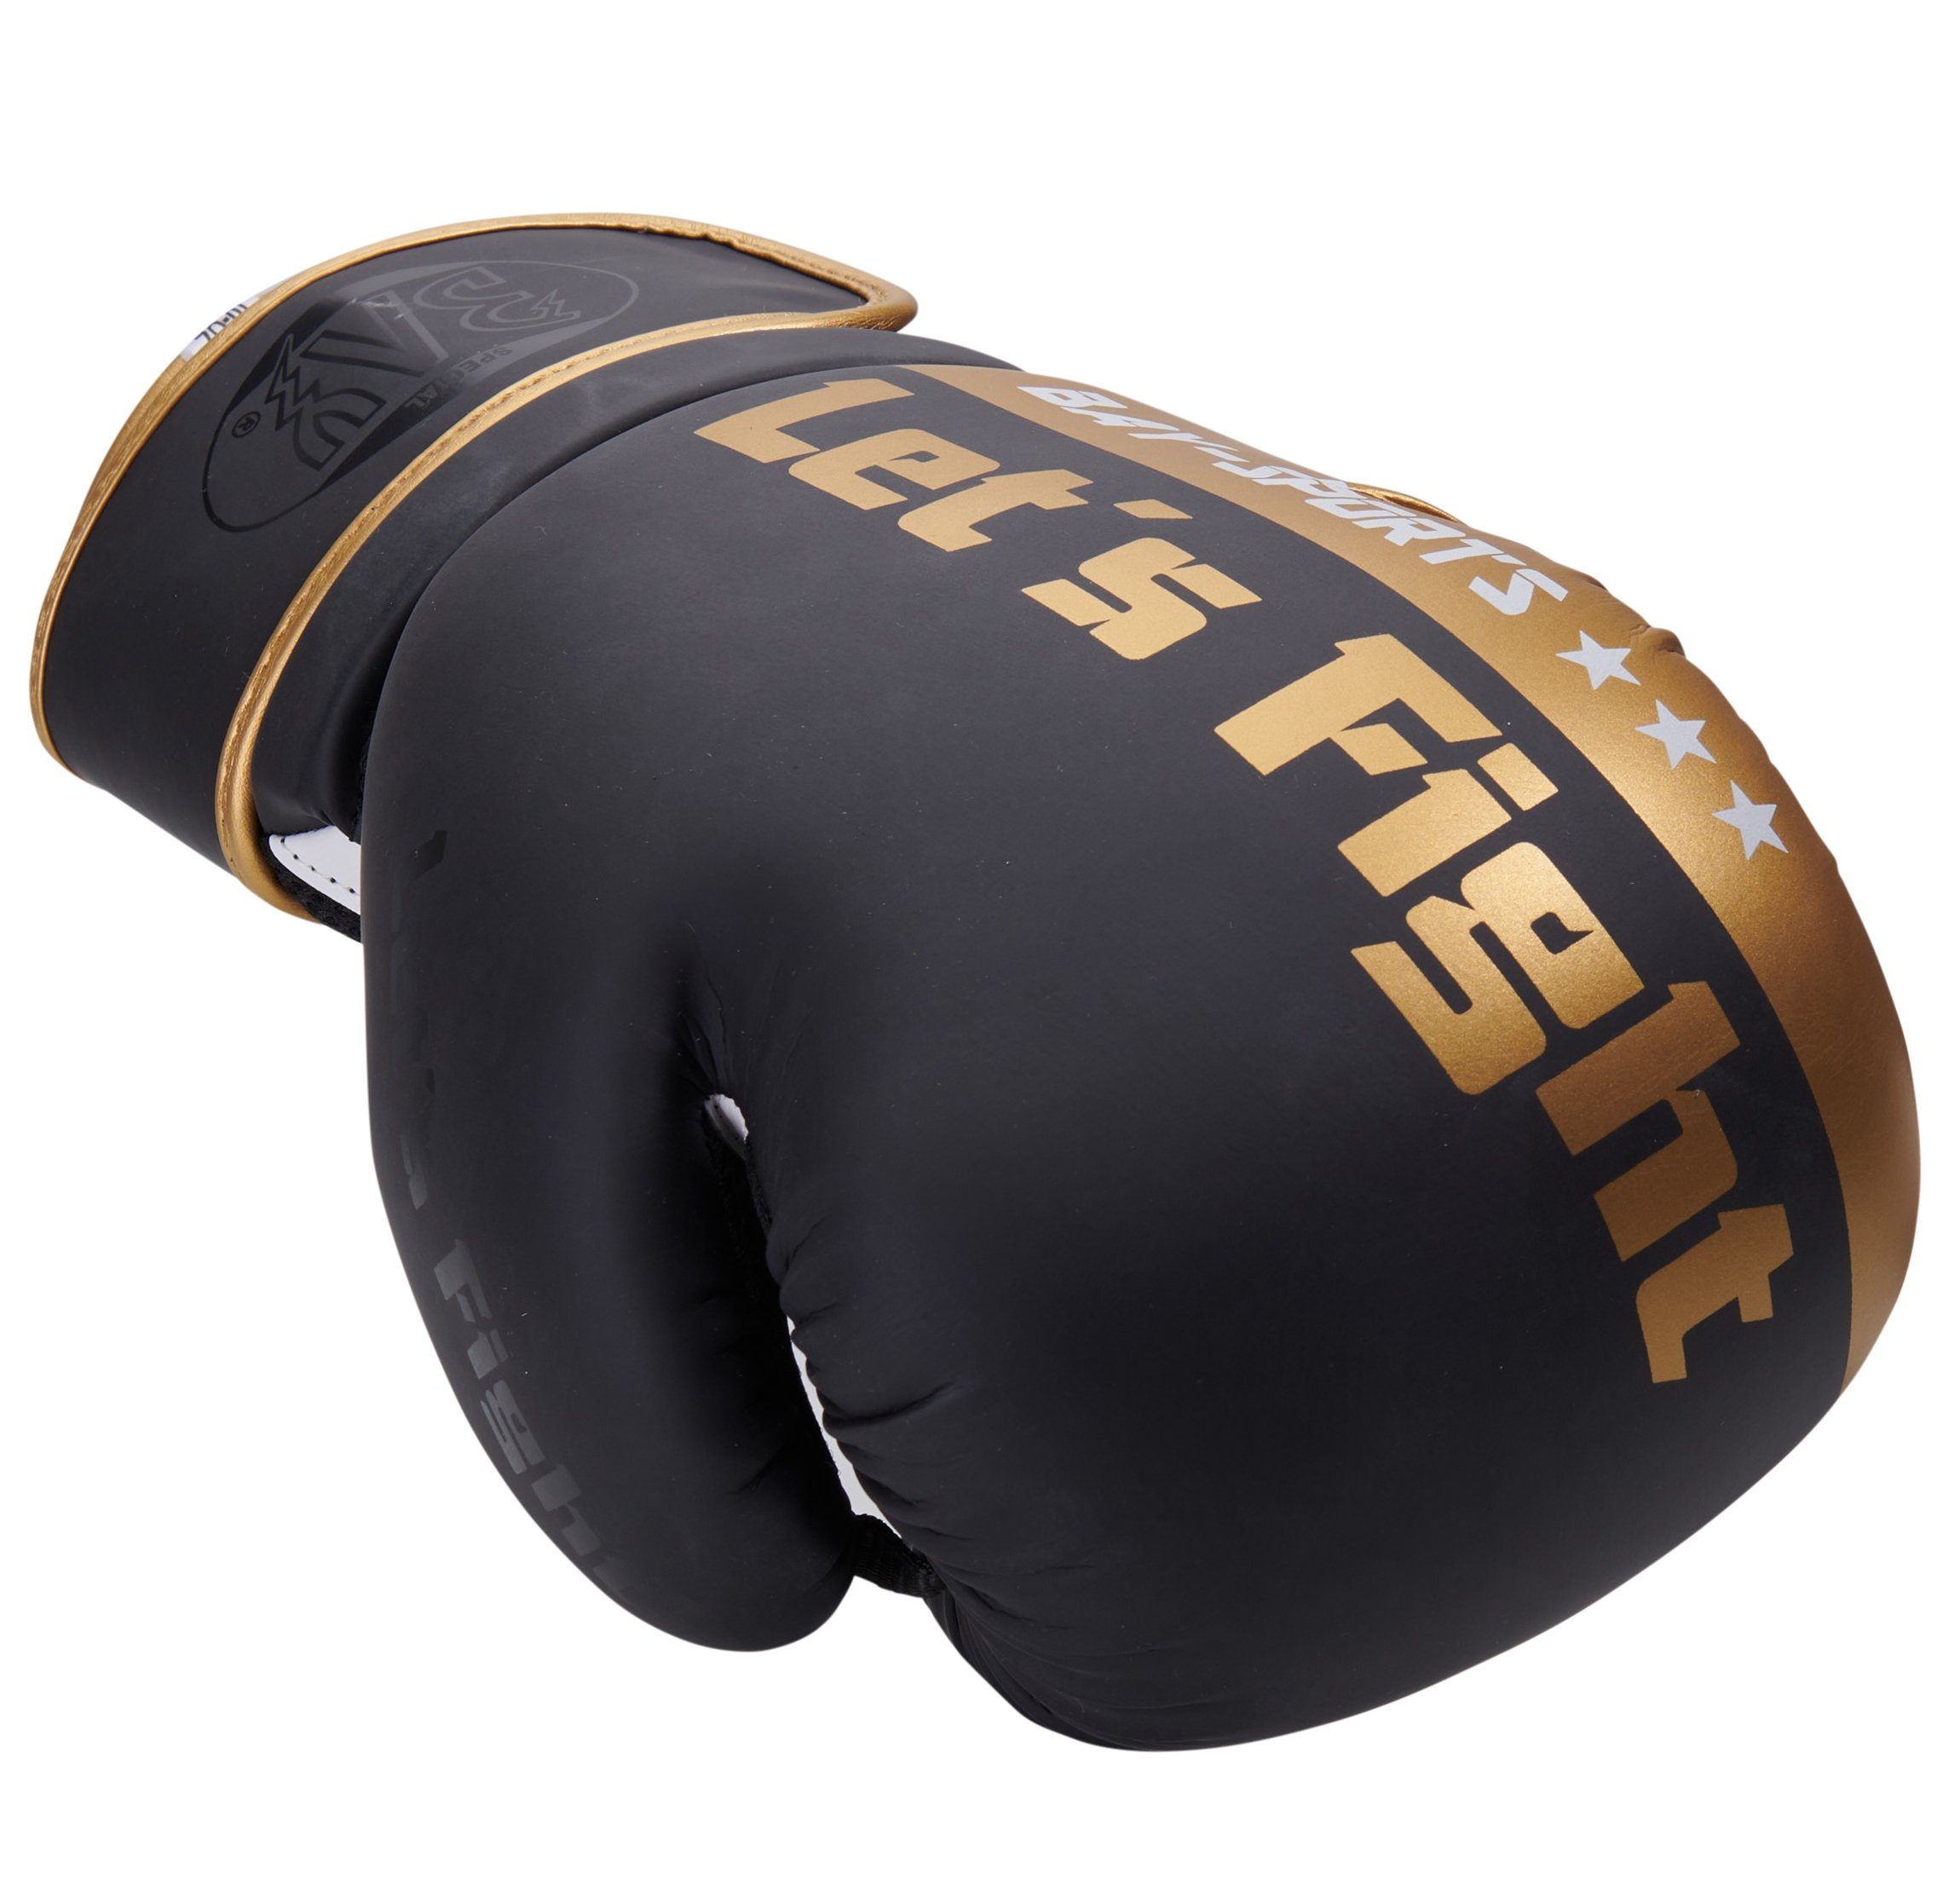 Fight gold Boxhandschuhe Kickboxe Box-Handschuhe Boxen BAY-Sports Mesh Lets